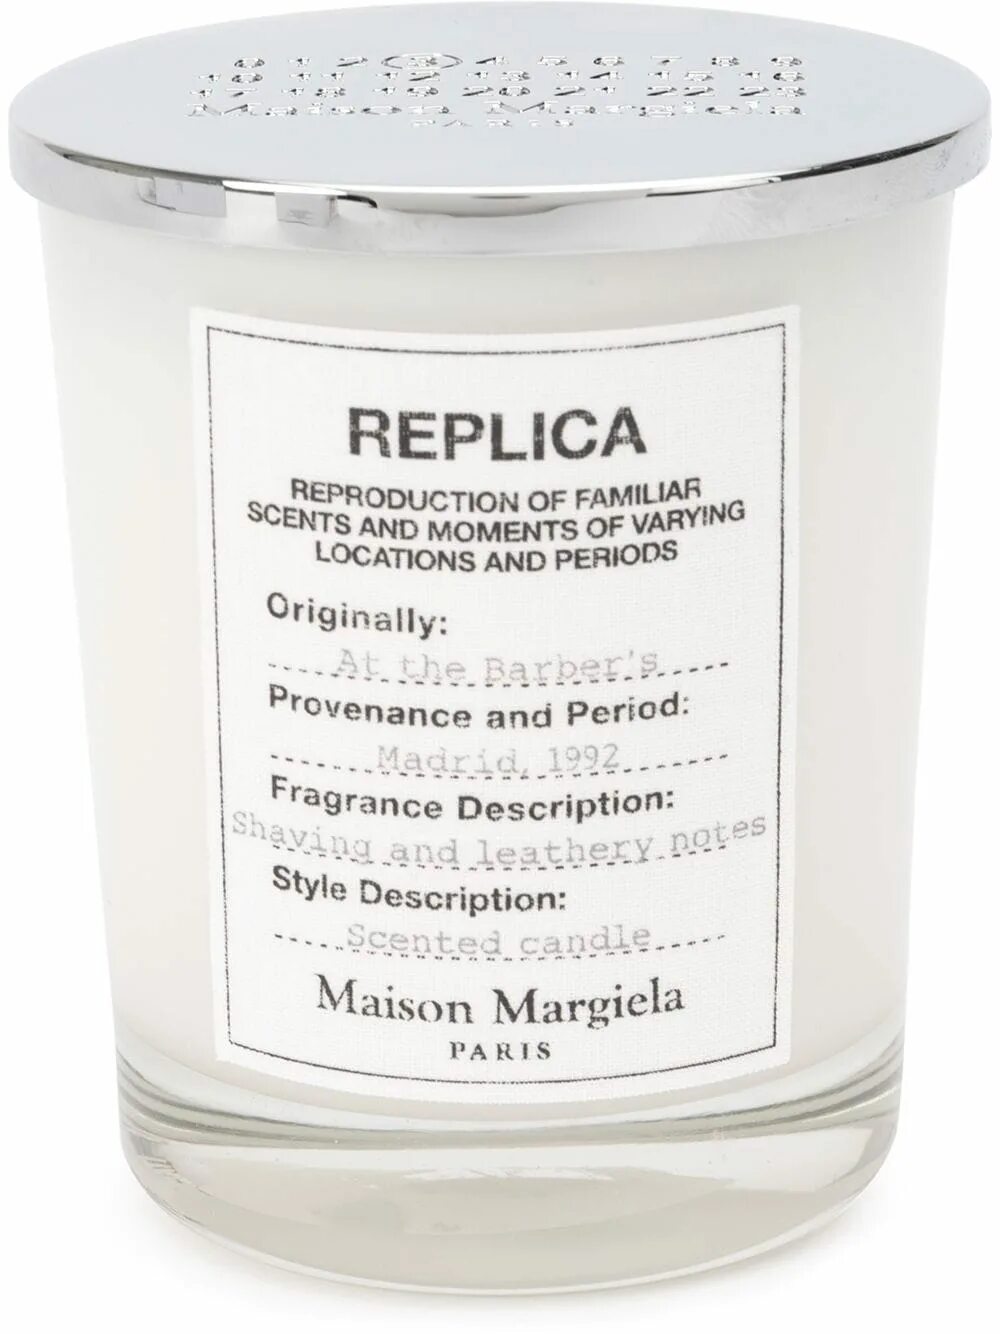 Maison Margiela свечи. Maison Margiela Replica by the Fireplace. Maison Margiela Jazz Club. Maison Margiela Replica at the Barber's.